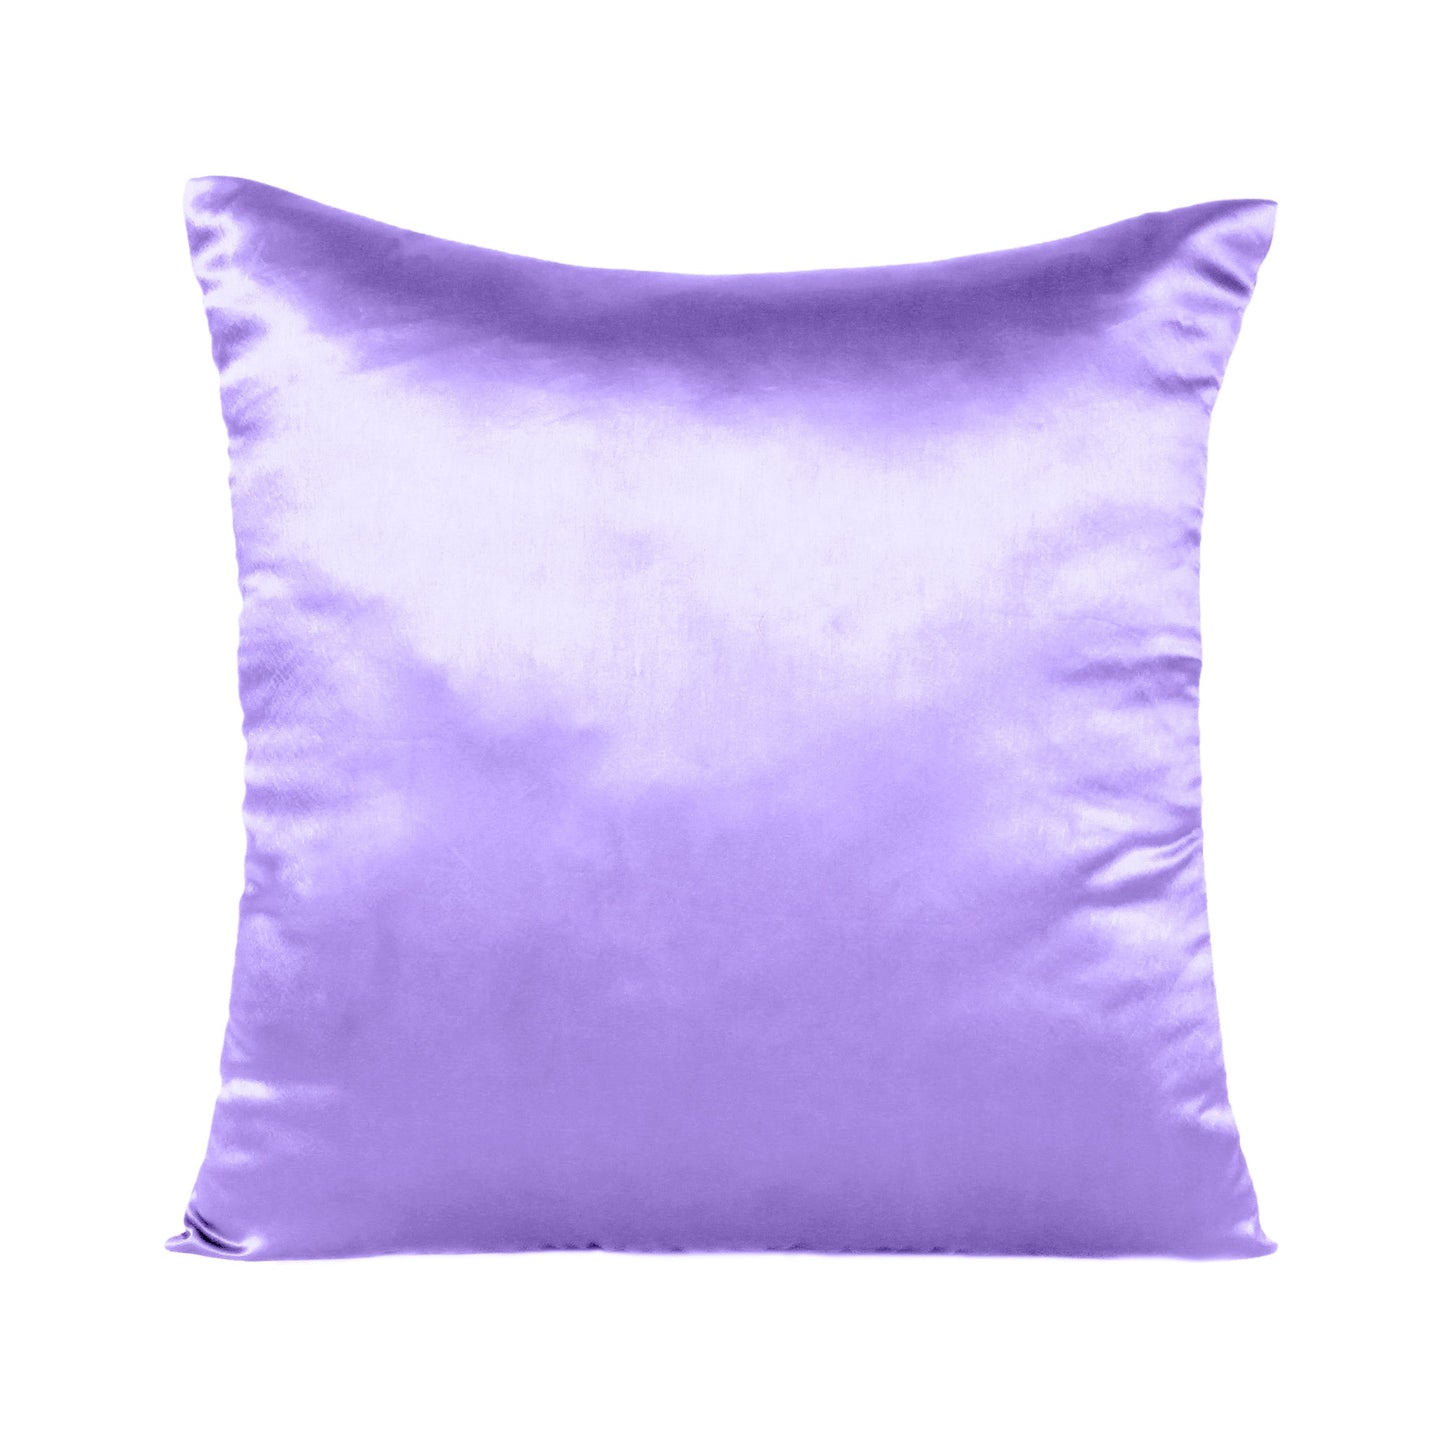 Dahlia Purple Satin Silky Cushion Covers in Set of 2